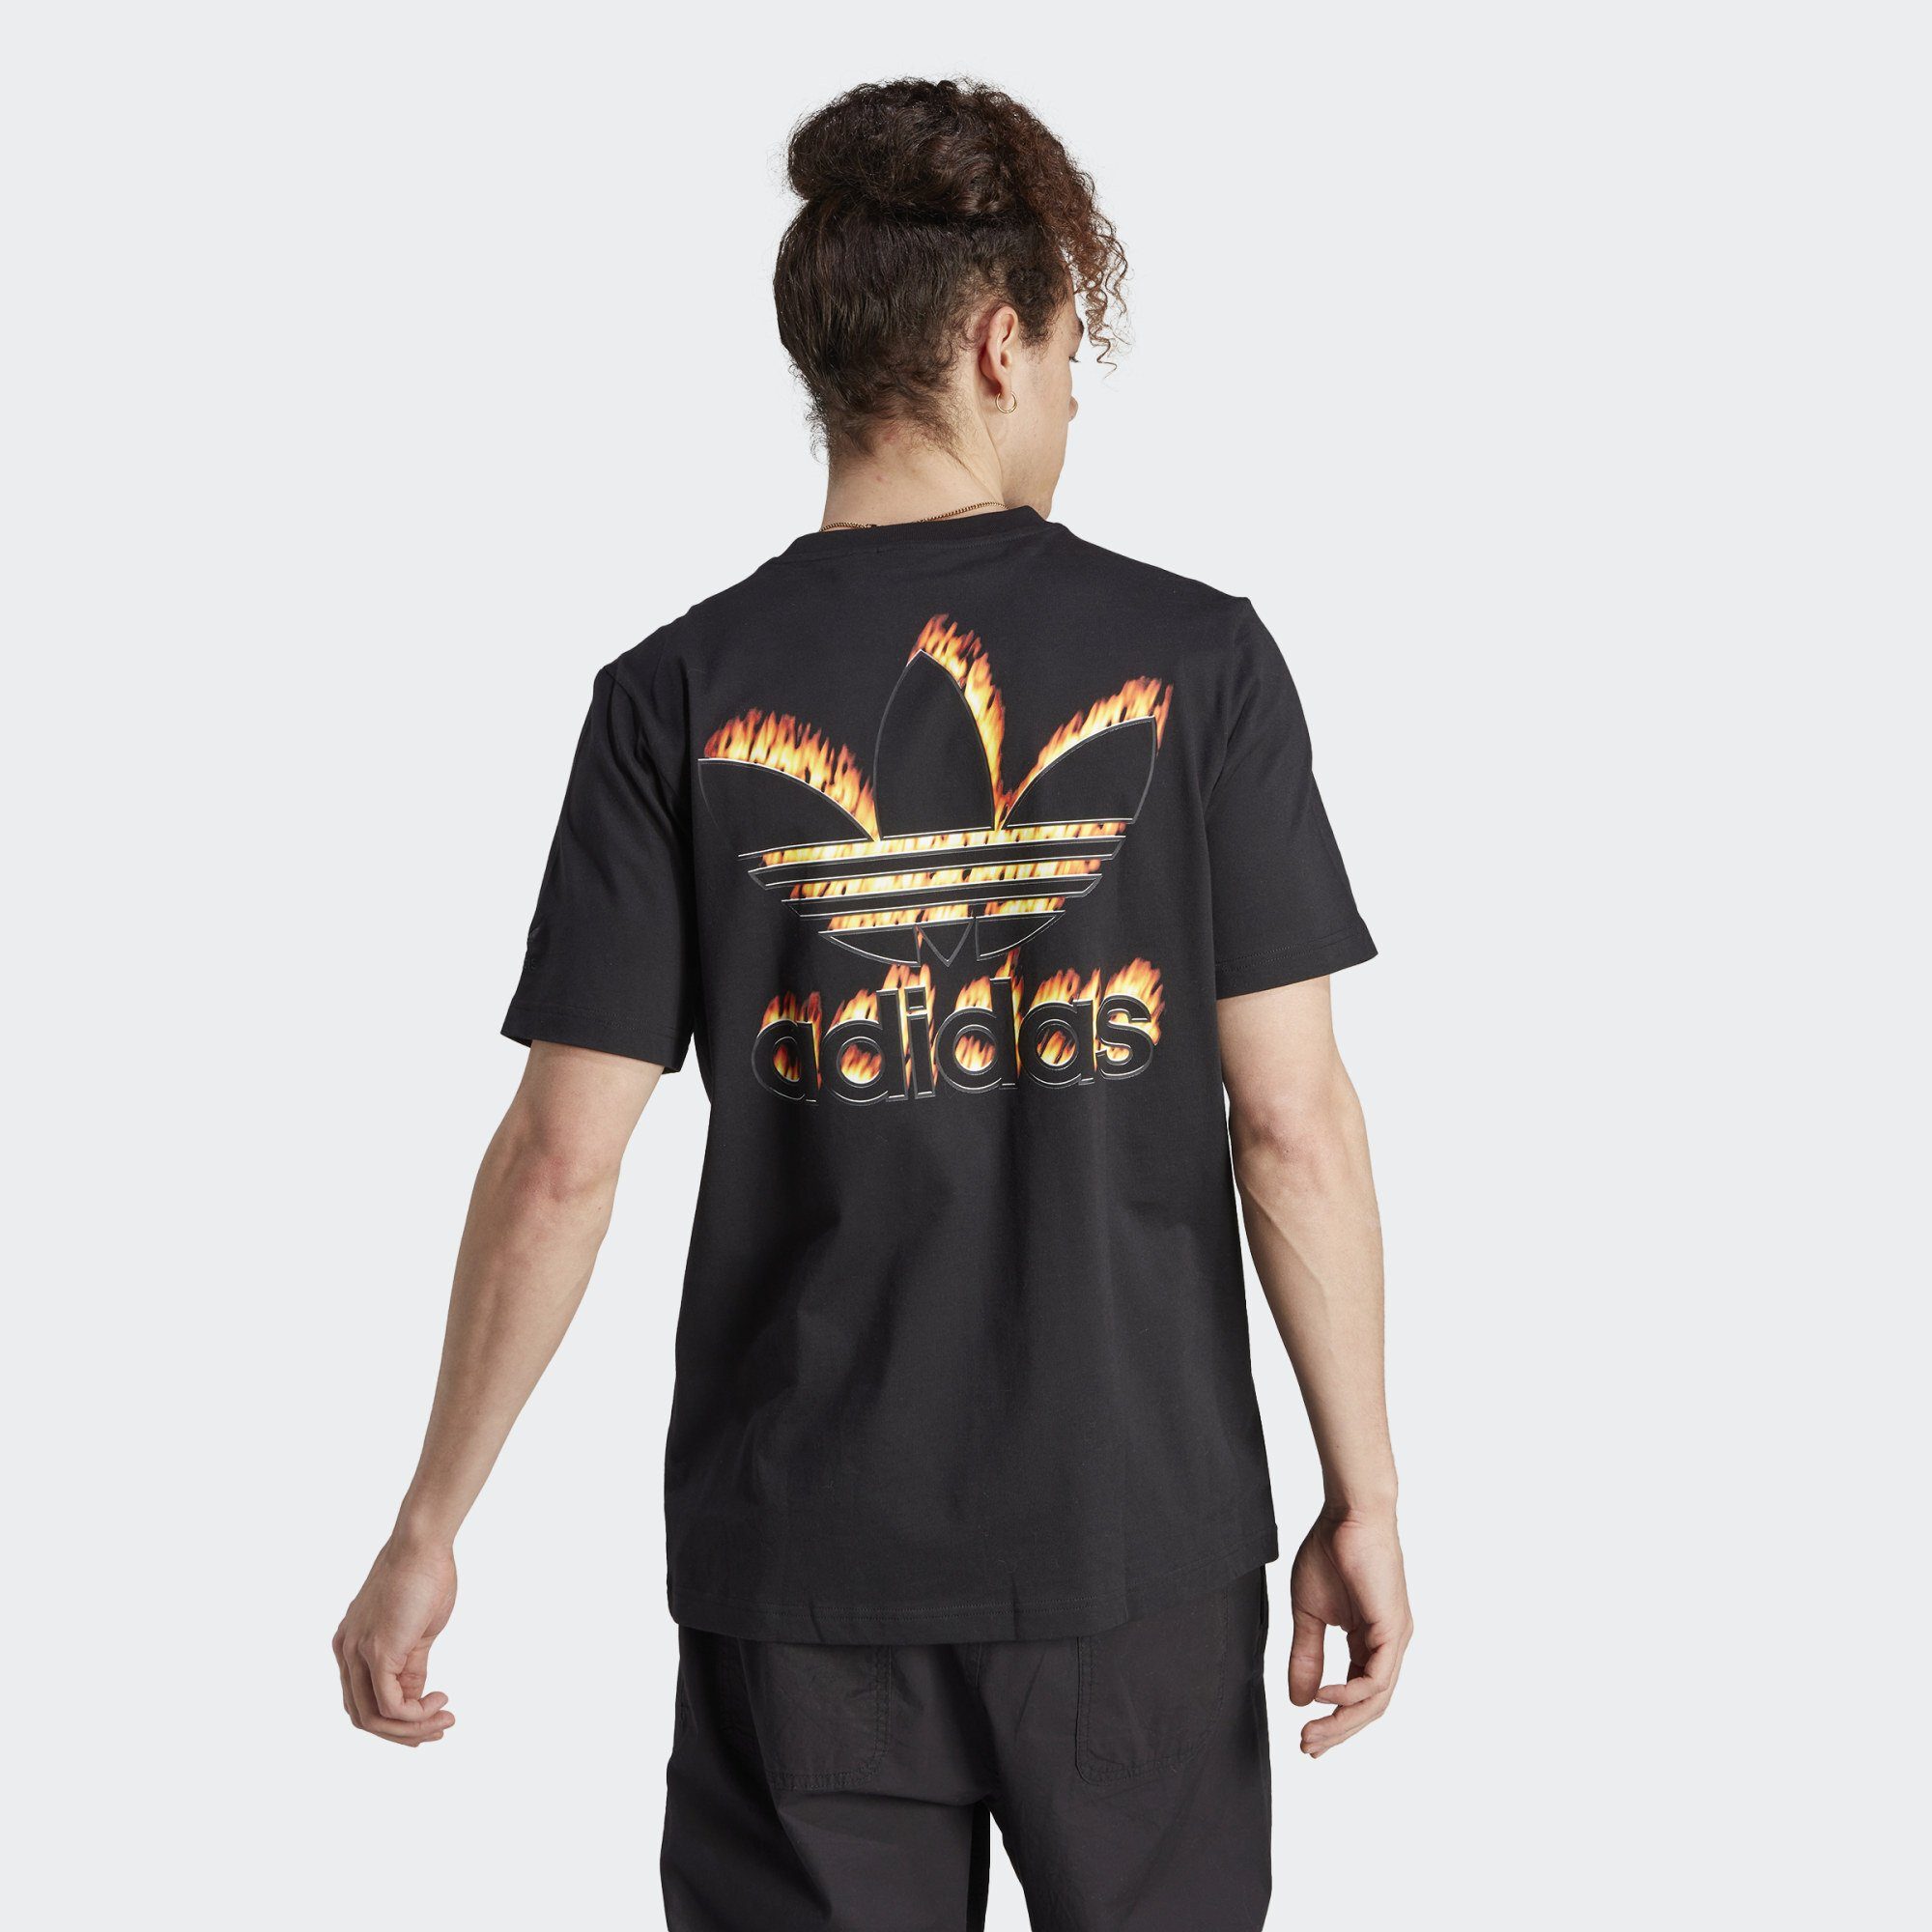 T-SHIRT Originals FIRE TREFOIL GRAPHICS T-Shirt adidas Black